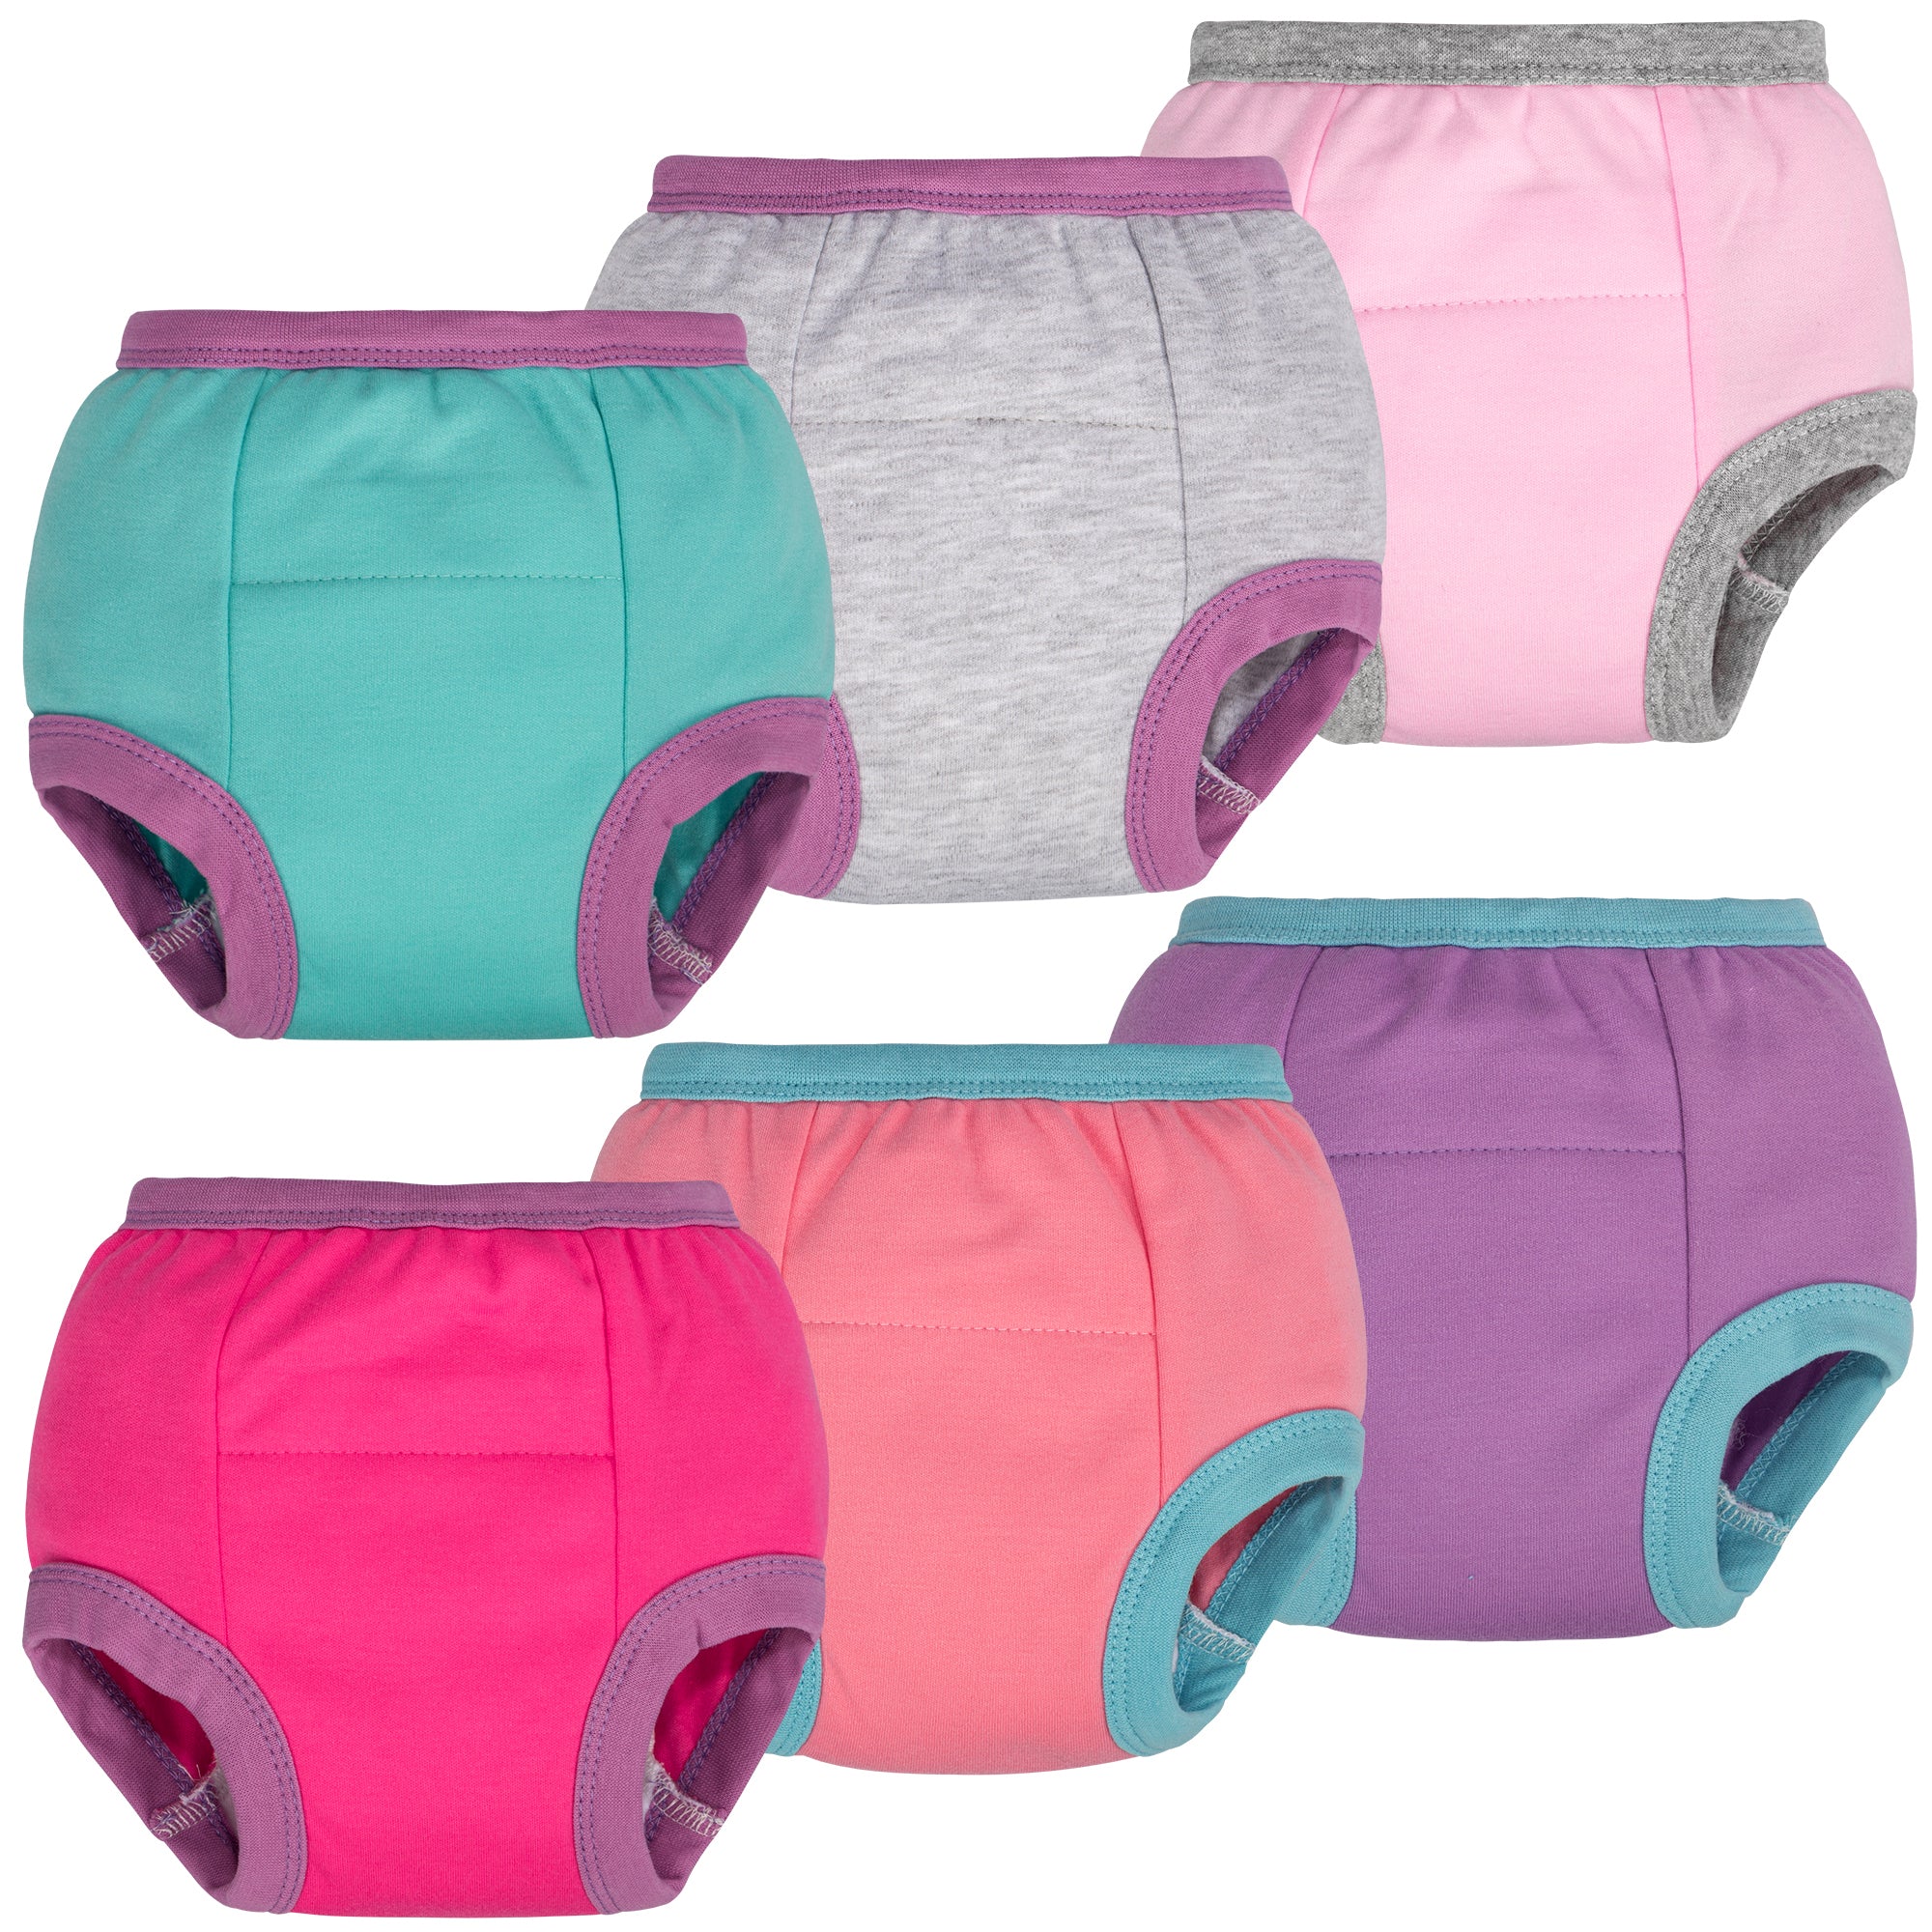  BIG ELEPHANT Potty Training Pants For Baby Boys 100% Cotton  Waterproof Training Underwear